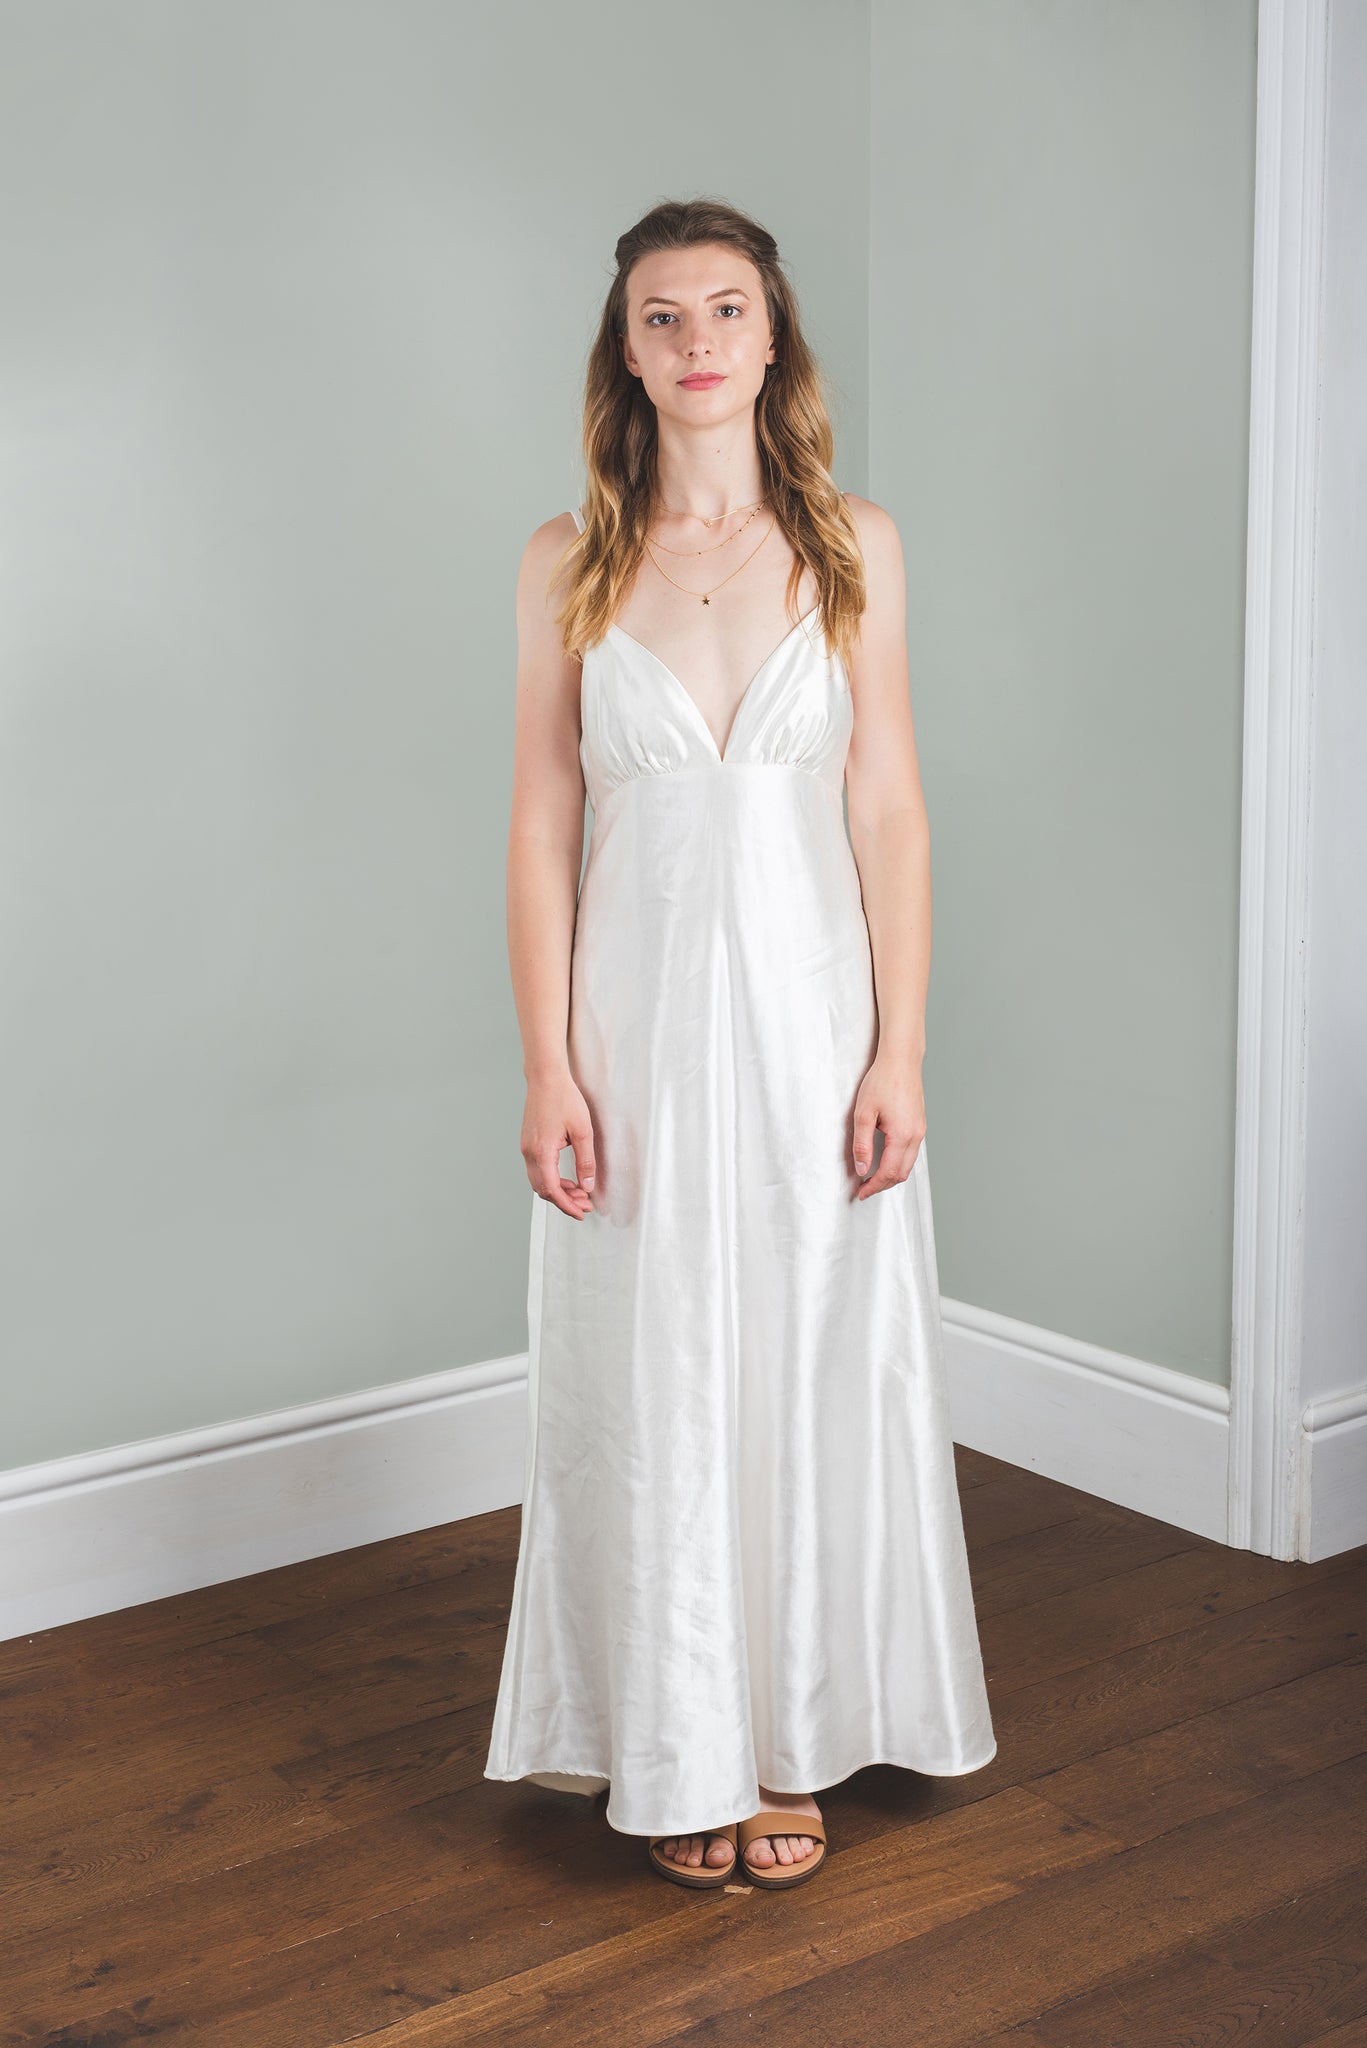 Bridal slip dress in hemp silk